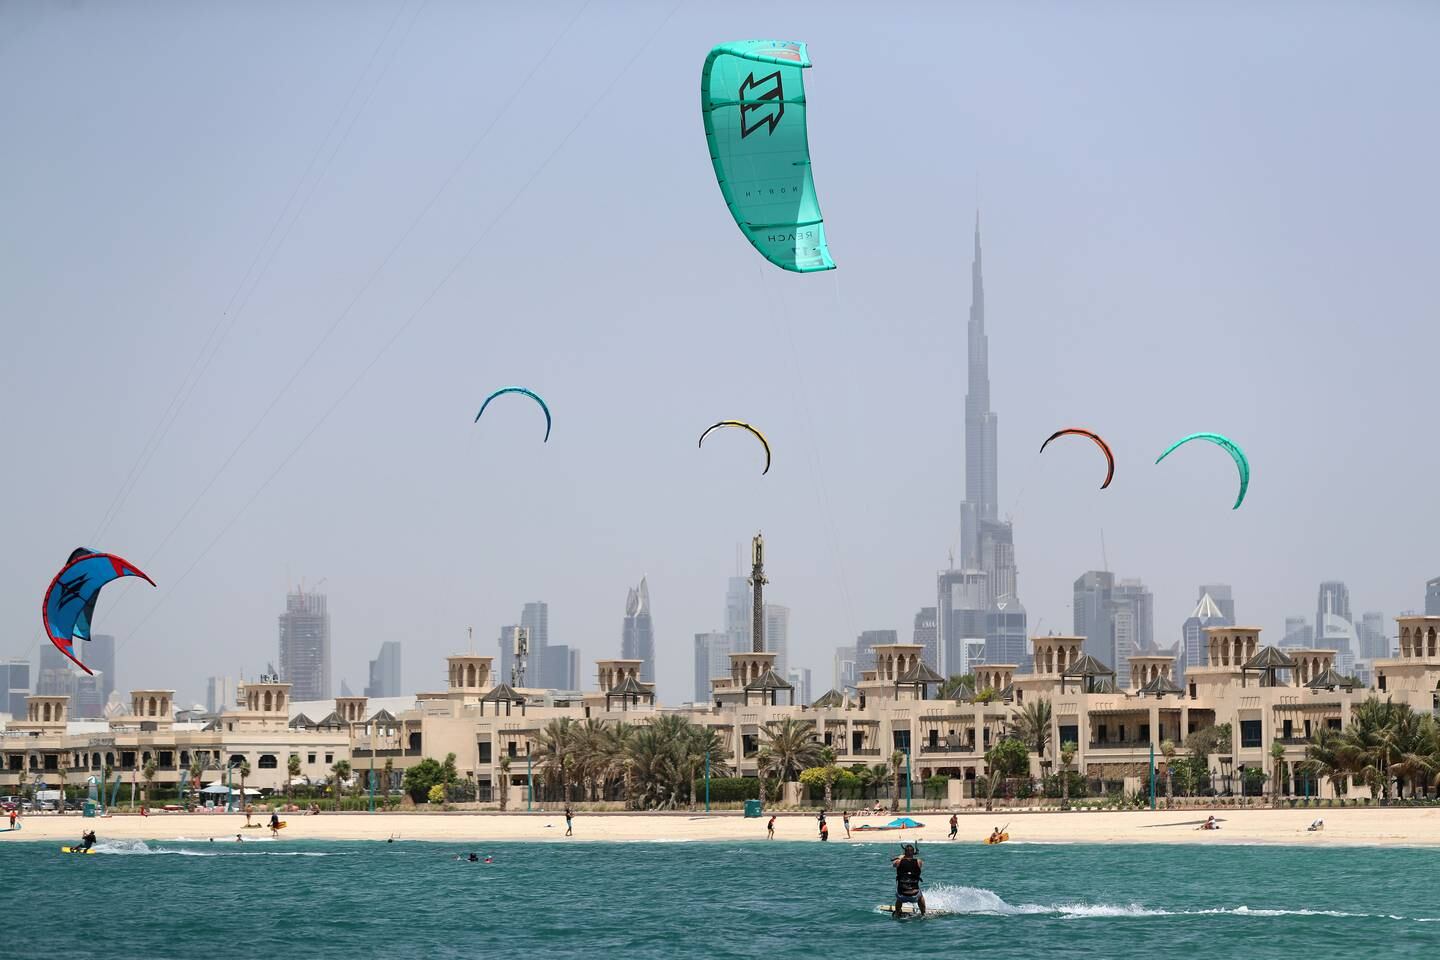 Kitesurfers take to the water off Kite Beach in Dubai. Chris Whiteoak / The National